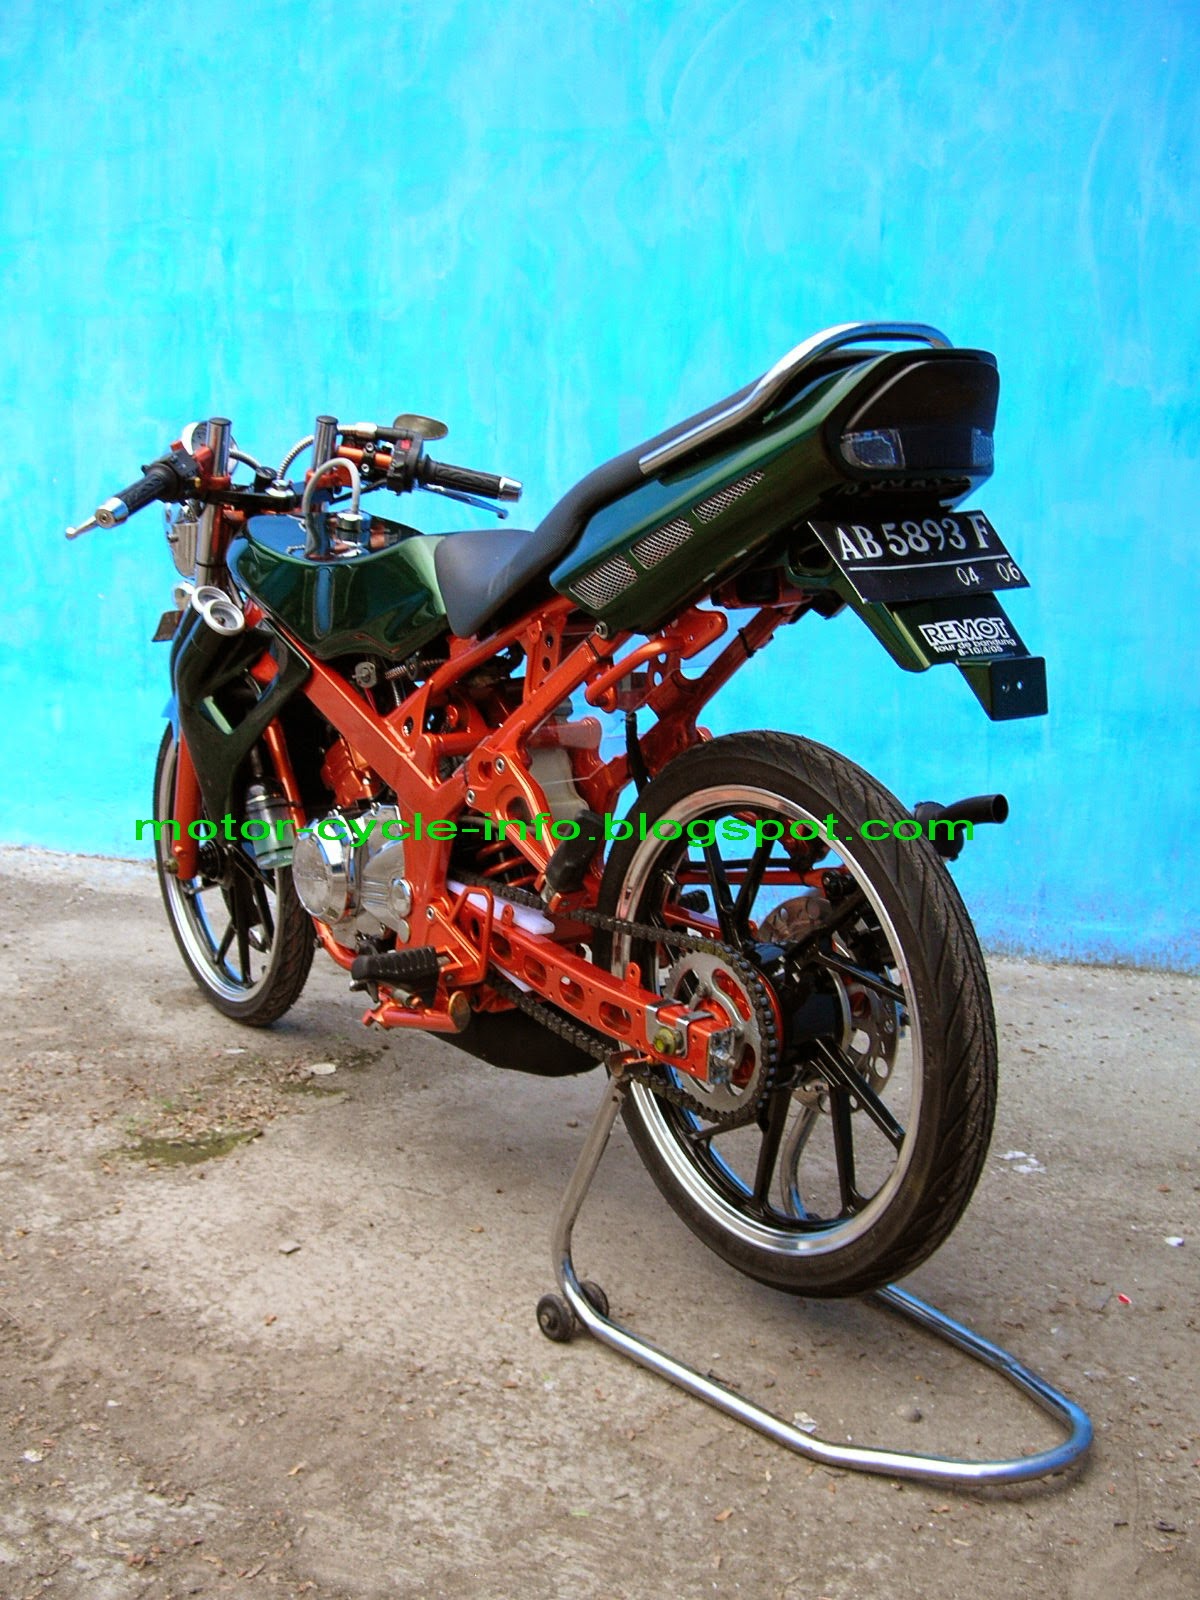  Modifikasi  Ninja  250  Menjadi Street  Fighter  Thecitycyclist